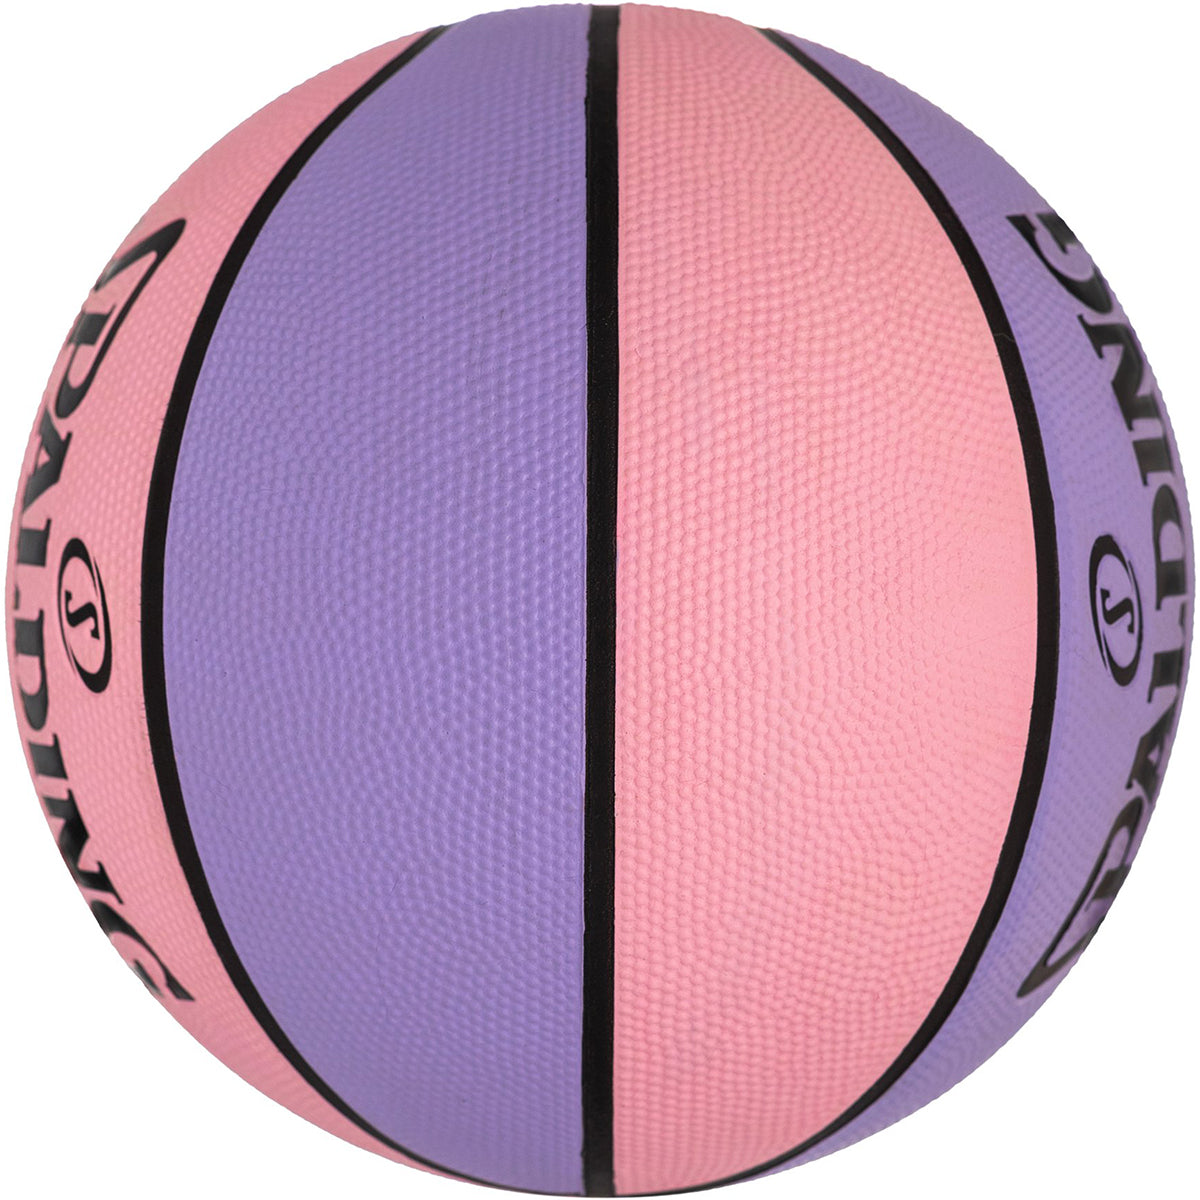 Spalding Street 28.5" Outdoor Basketball - Pink/Purple Spalding